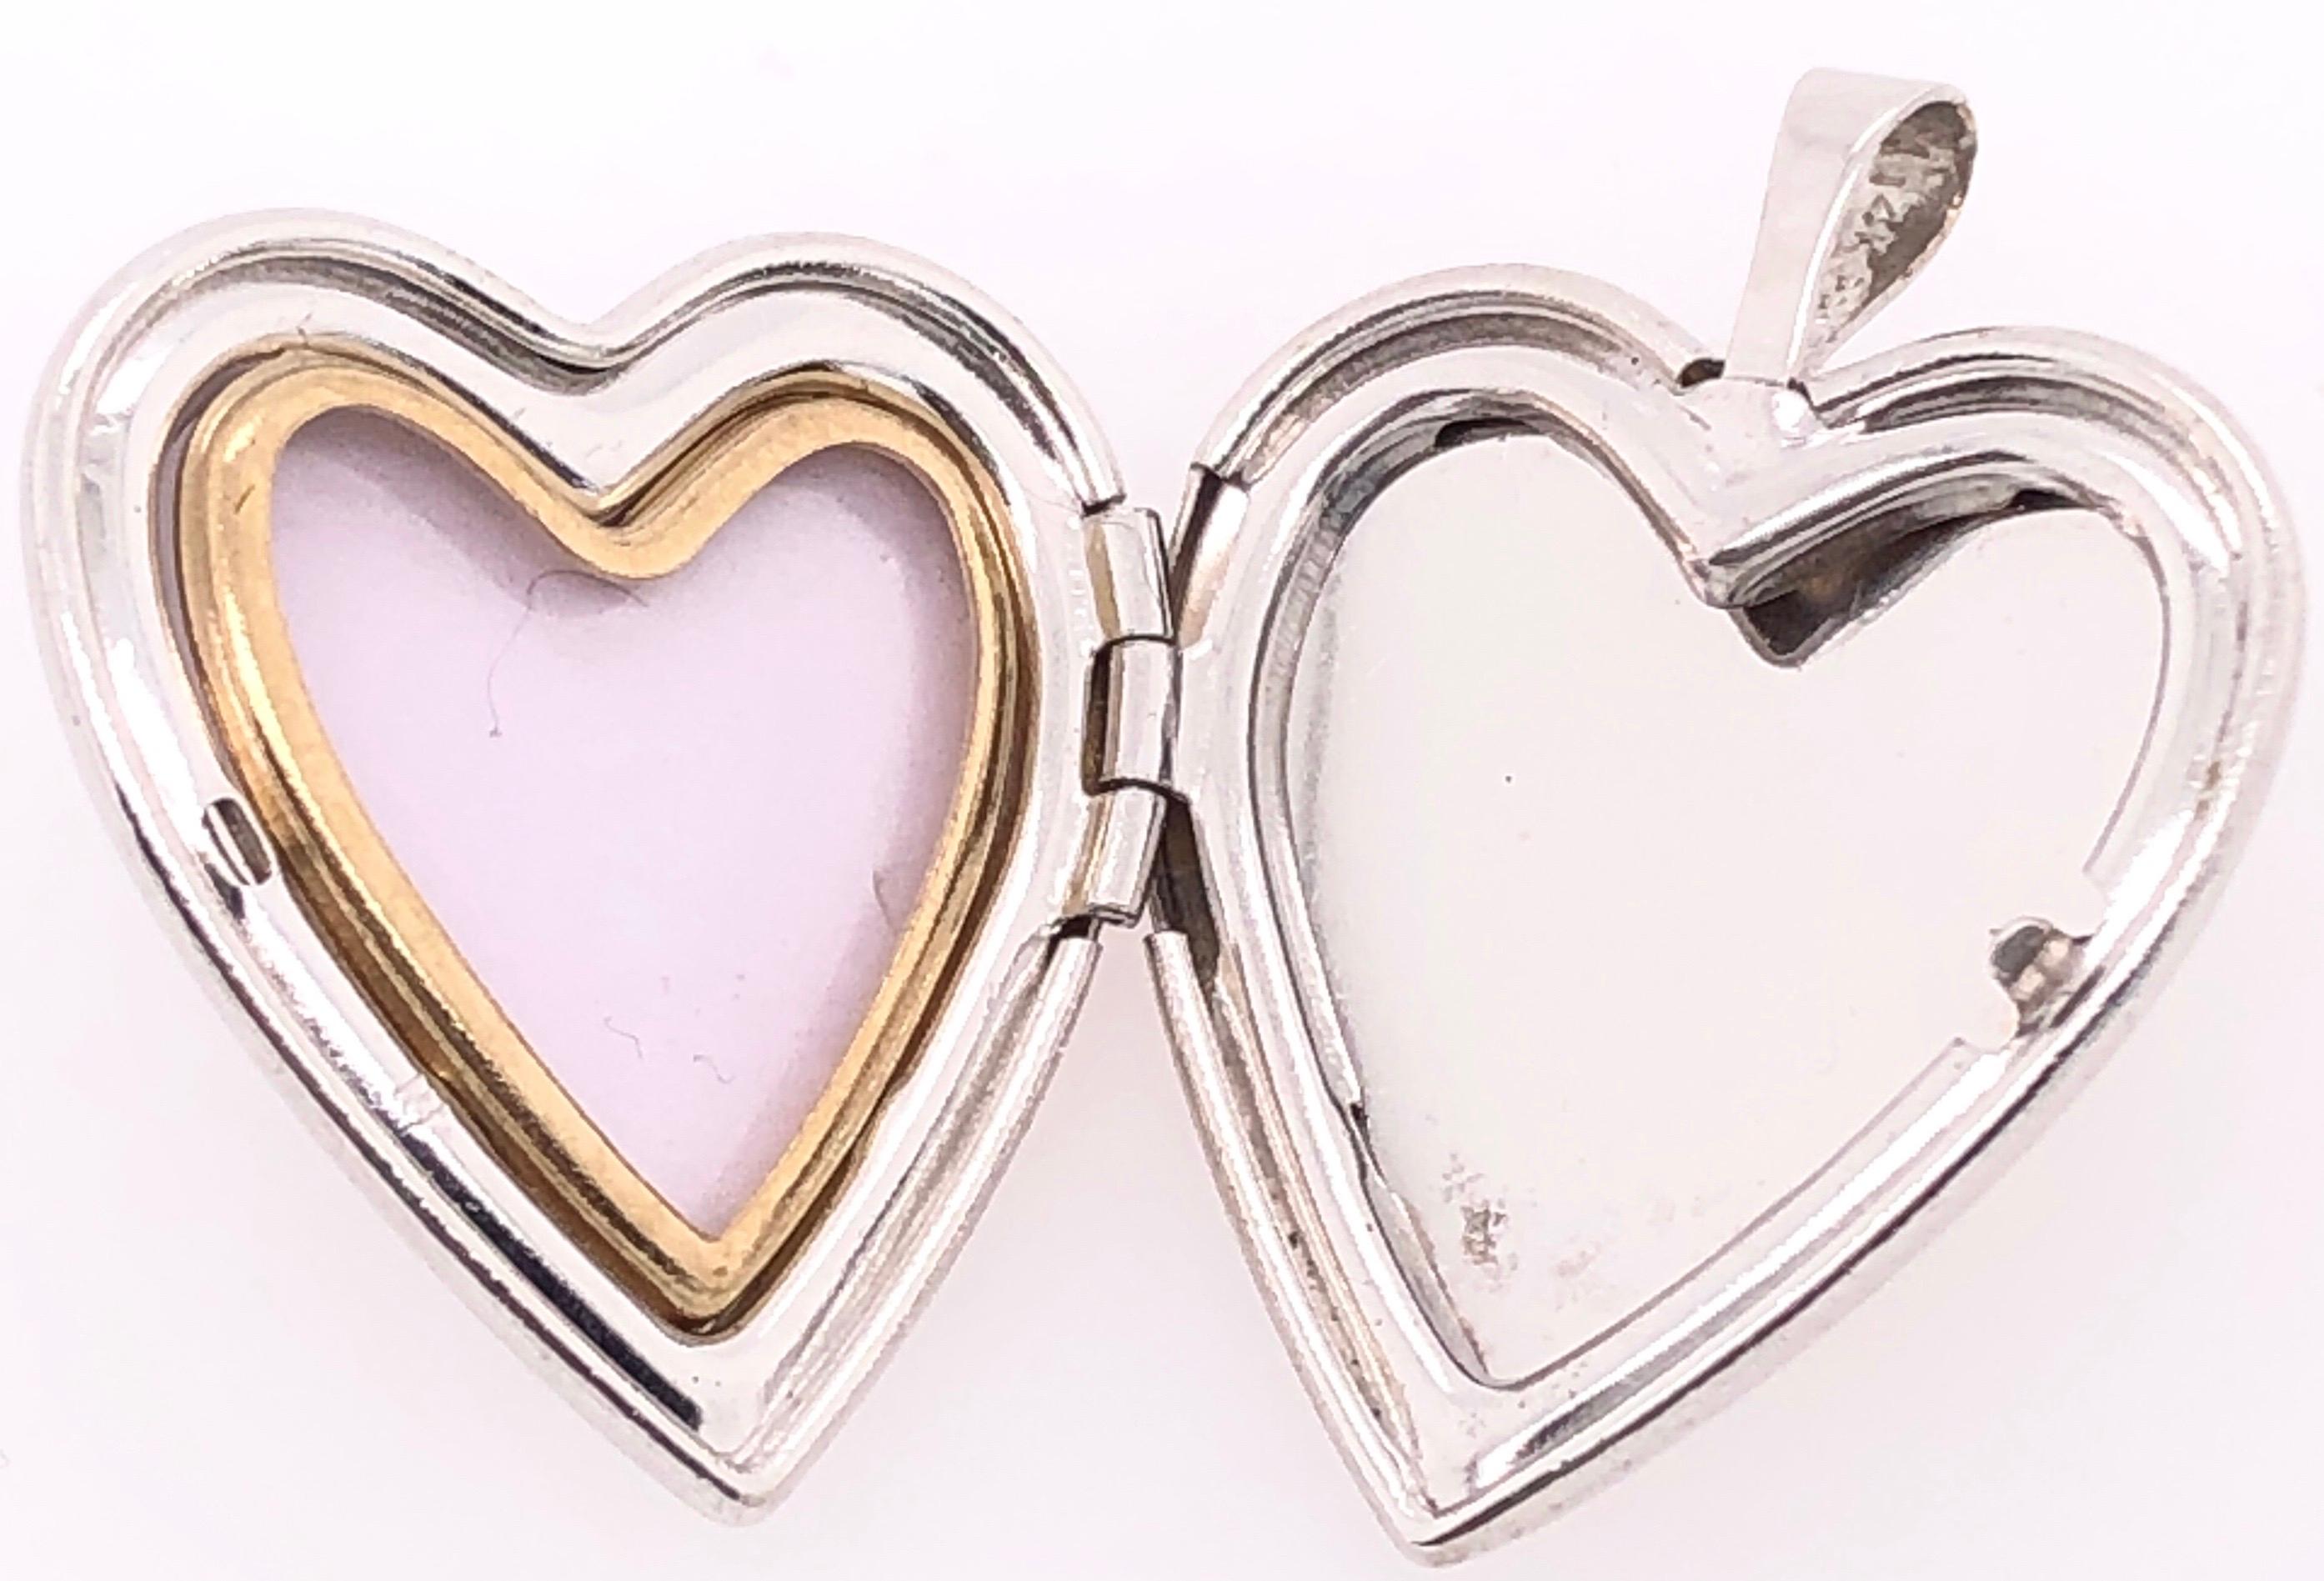 14 Karat White Gold Heart Locket Pendant with Diamonds 0.18 TDW.
5 grams total weight.